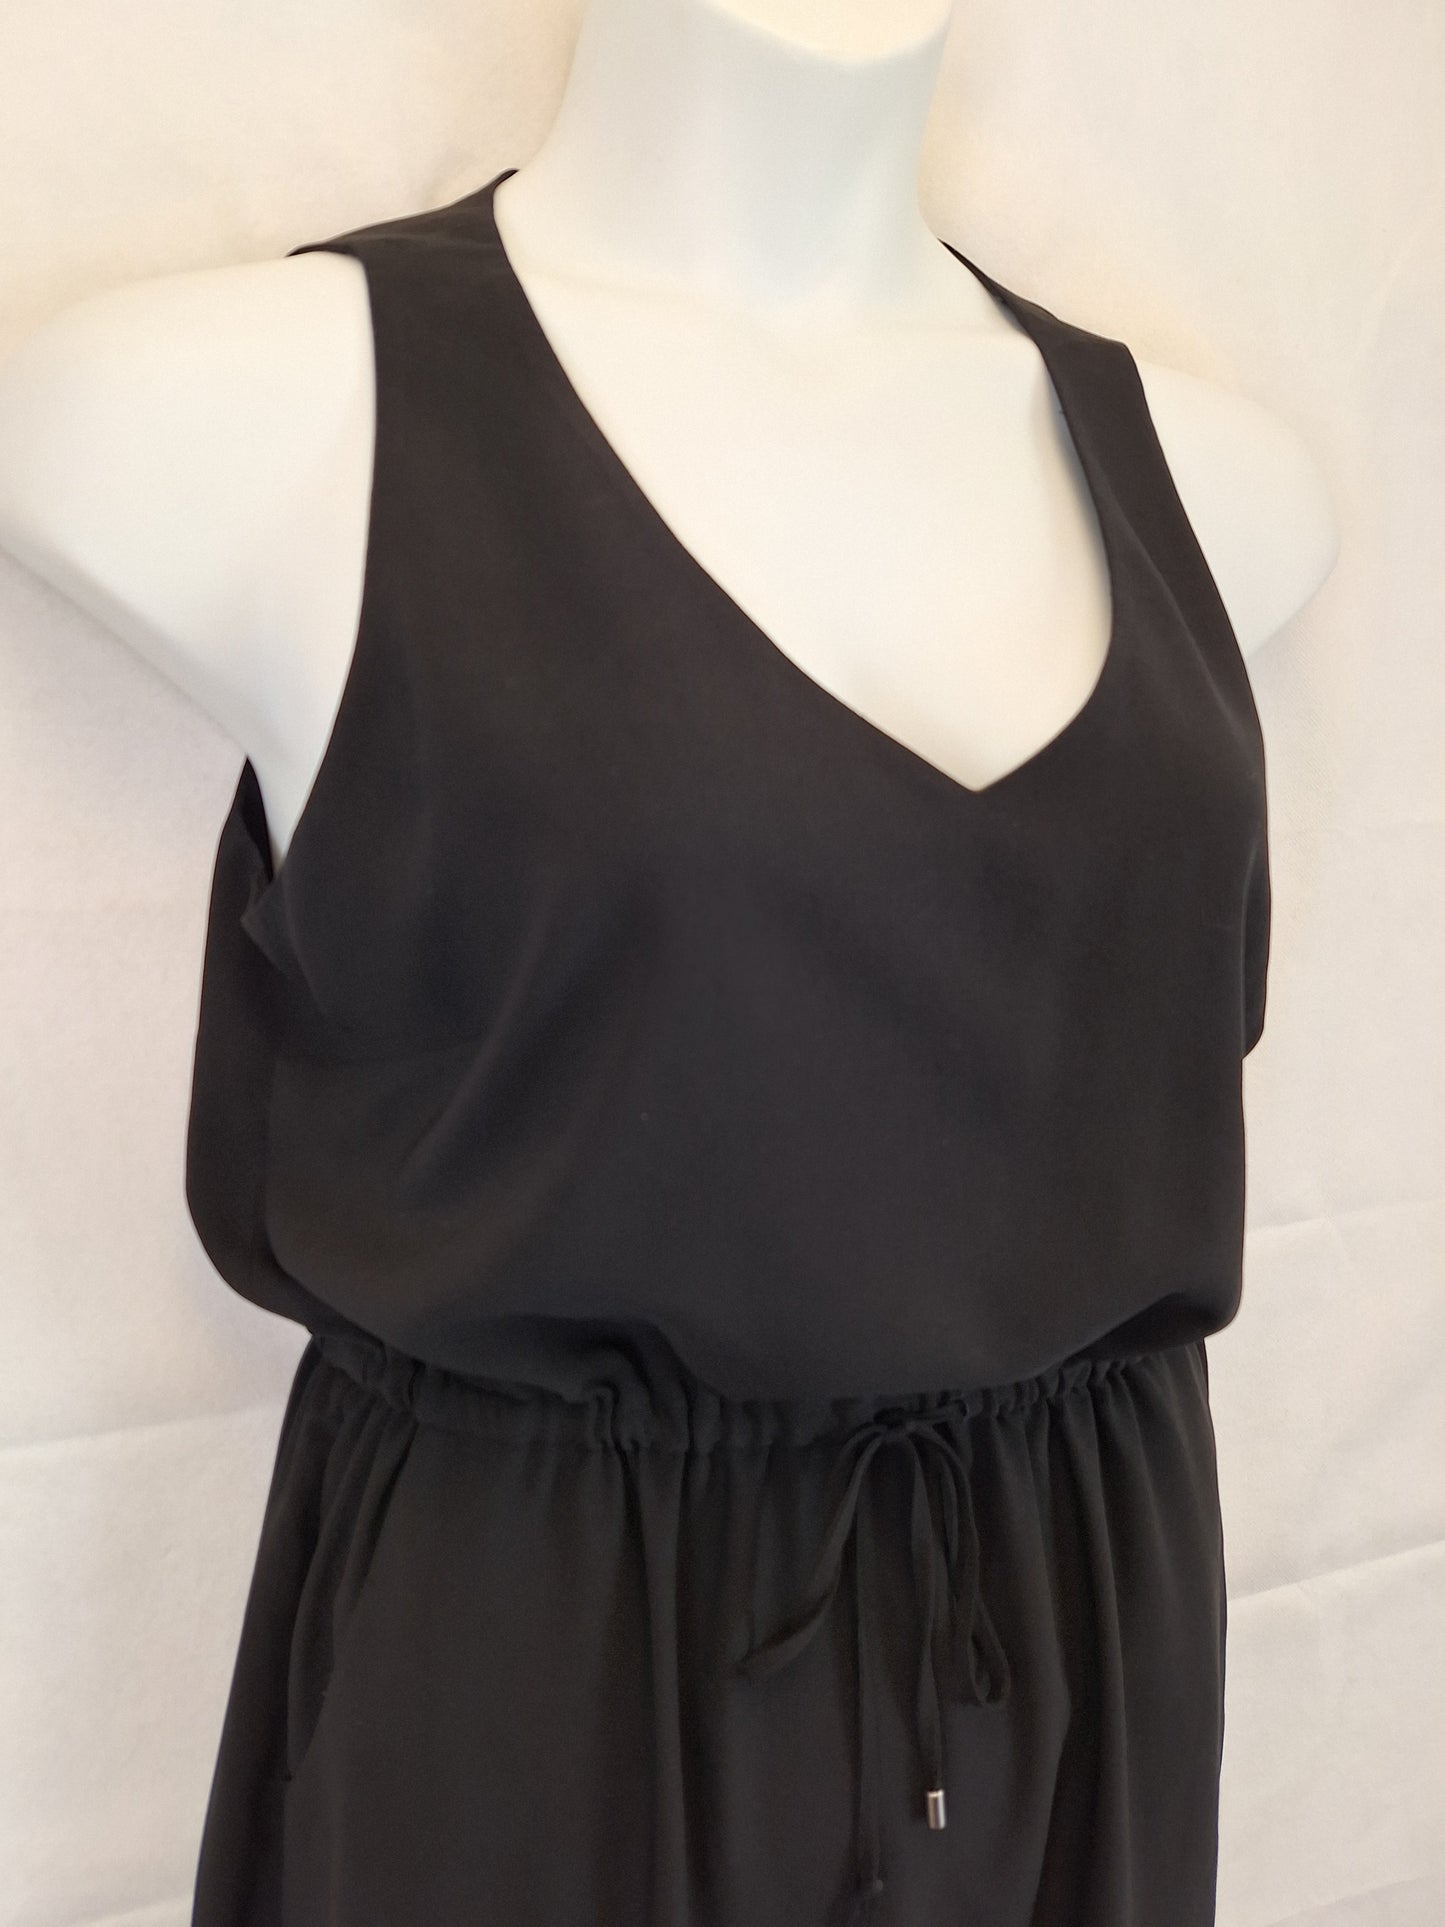 Decjuba Basic Elasticated Waist Mini Dress Size 12 by SwapUp-Online Second Hand Store-Online Thrift Store